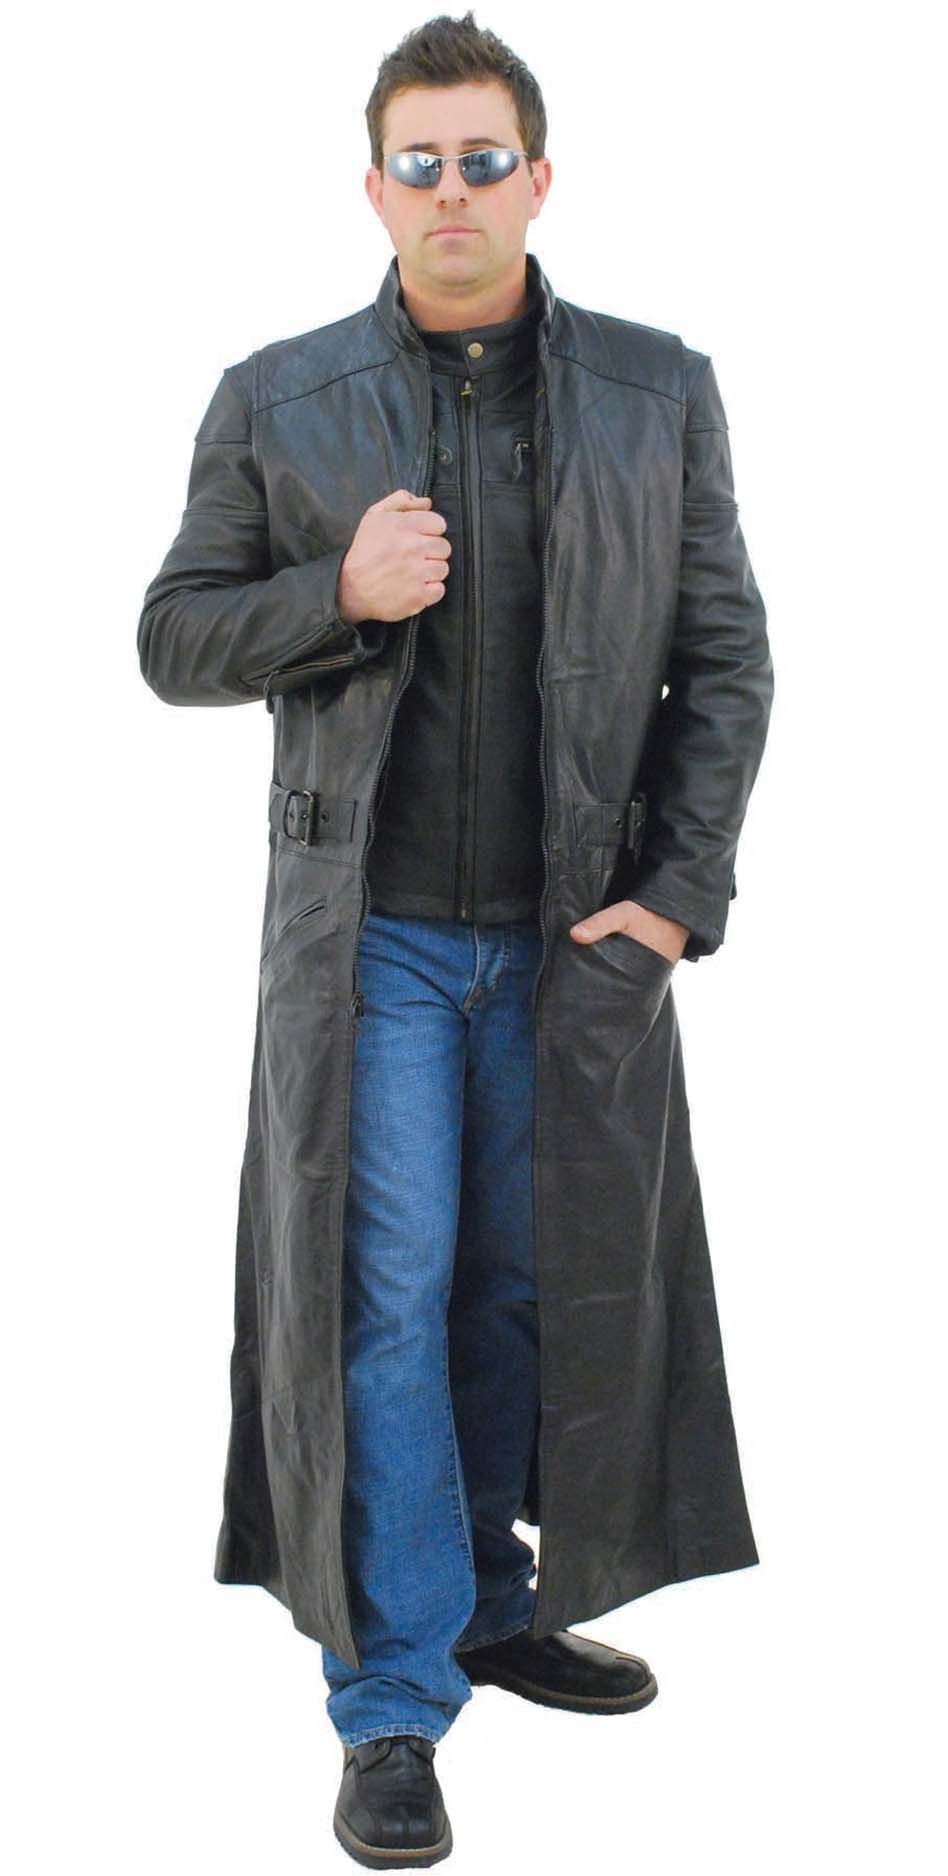 Black leather jacket for men in a vintage rub finish. 